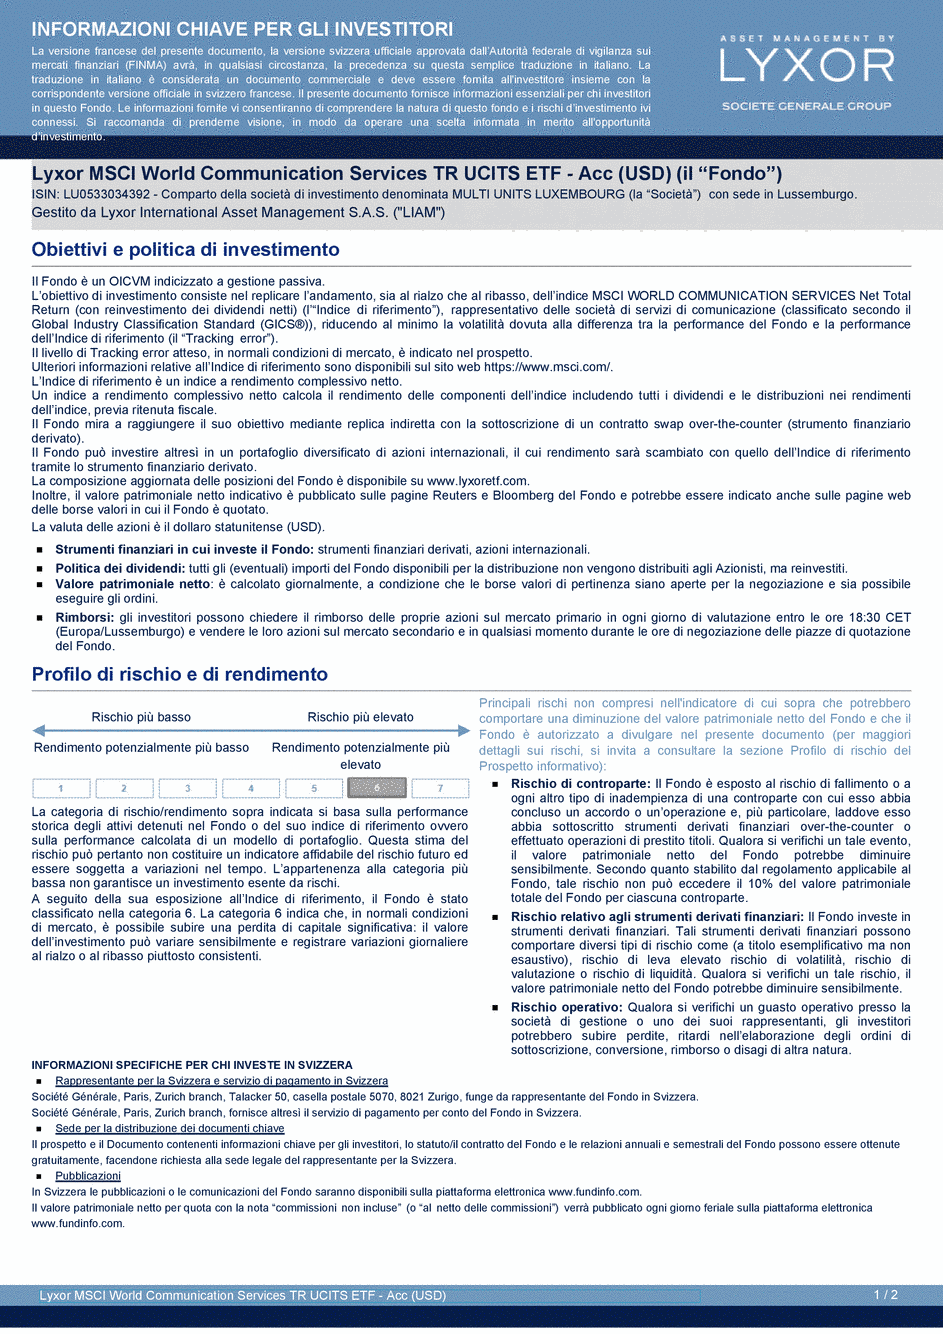 DICI Lyxor MSCI World Communication Services TR UCITS ETF - Acc (USD) - 26/08/2020 - Italien